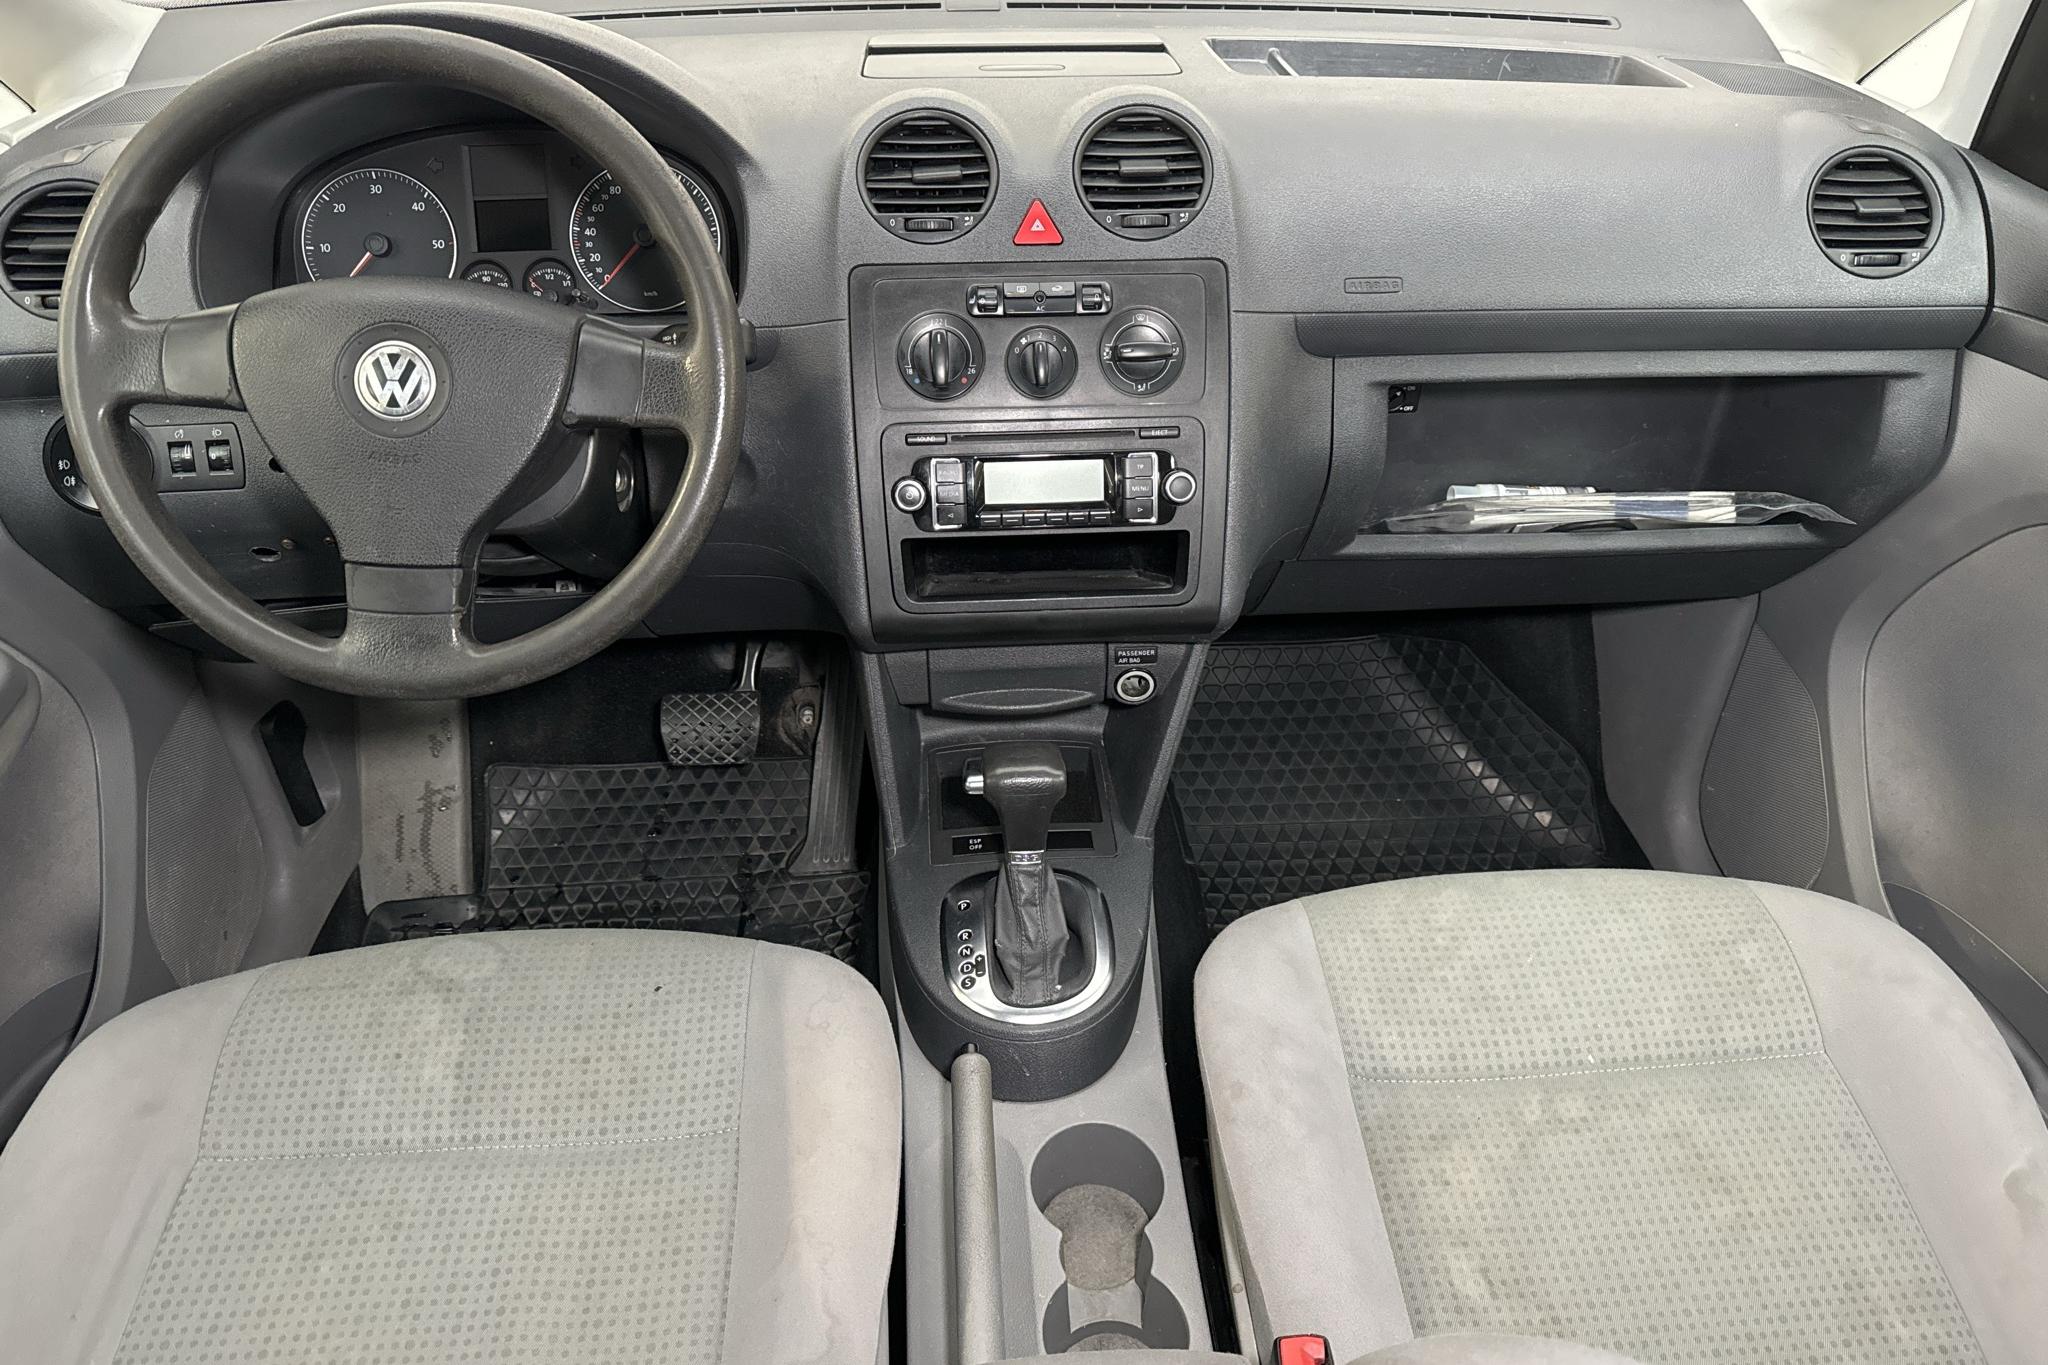 VW Caddy Maxi Life 1.9 TDI (105hk) - 174 910 km - Automatic - white - 2009